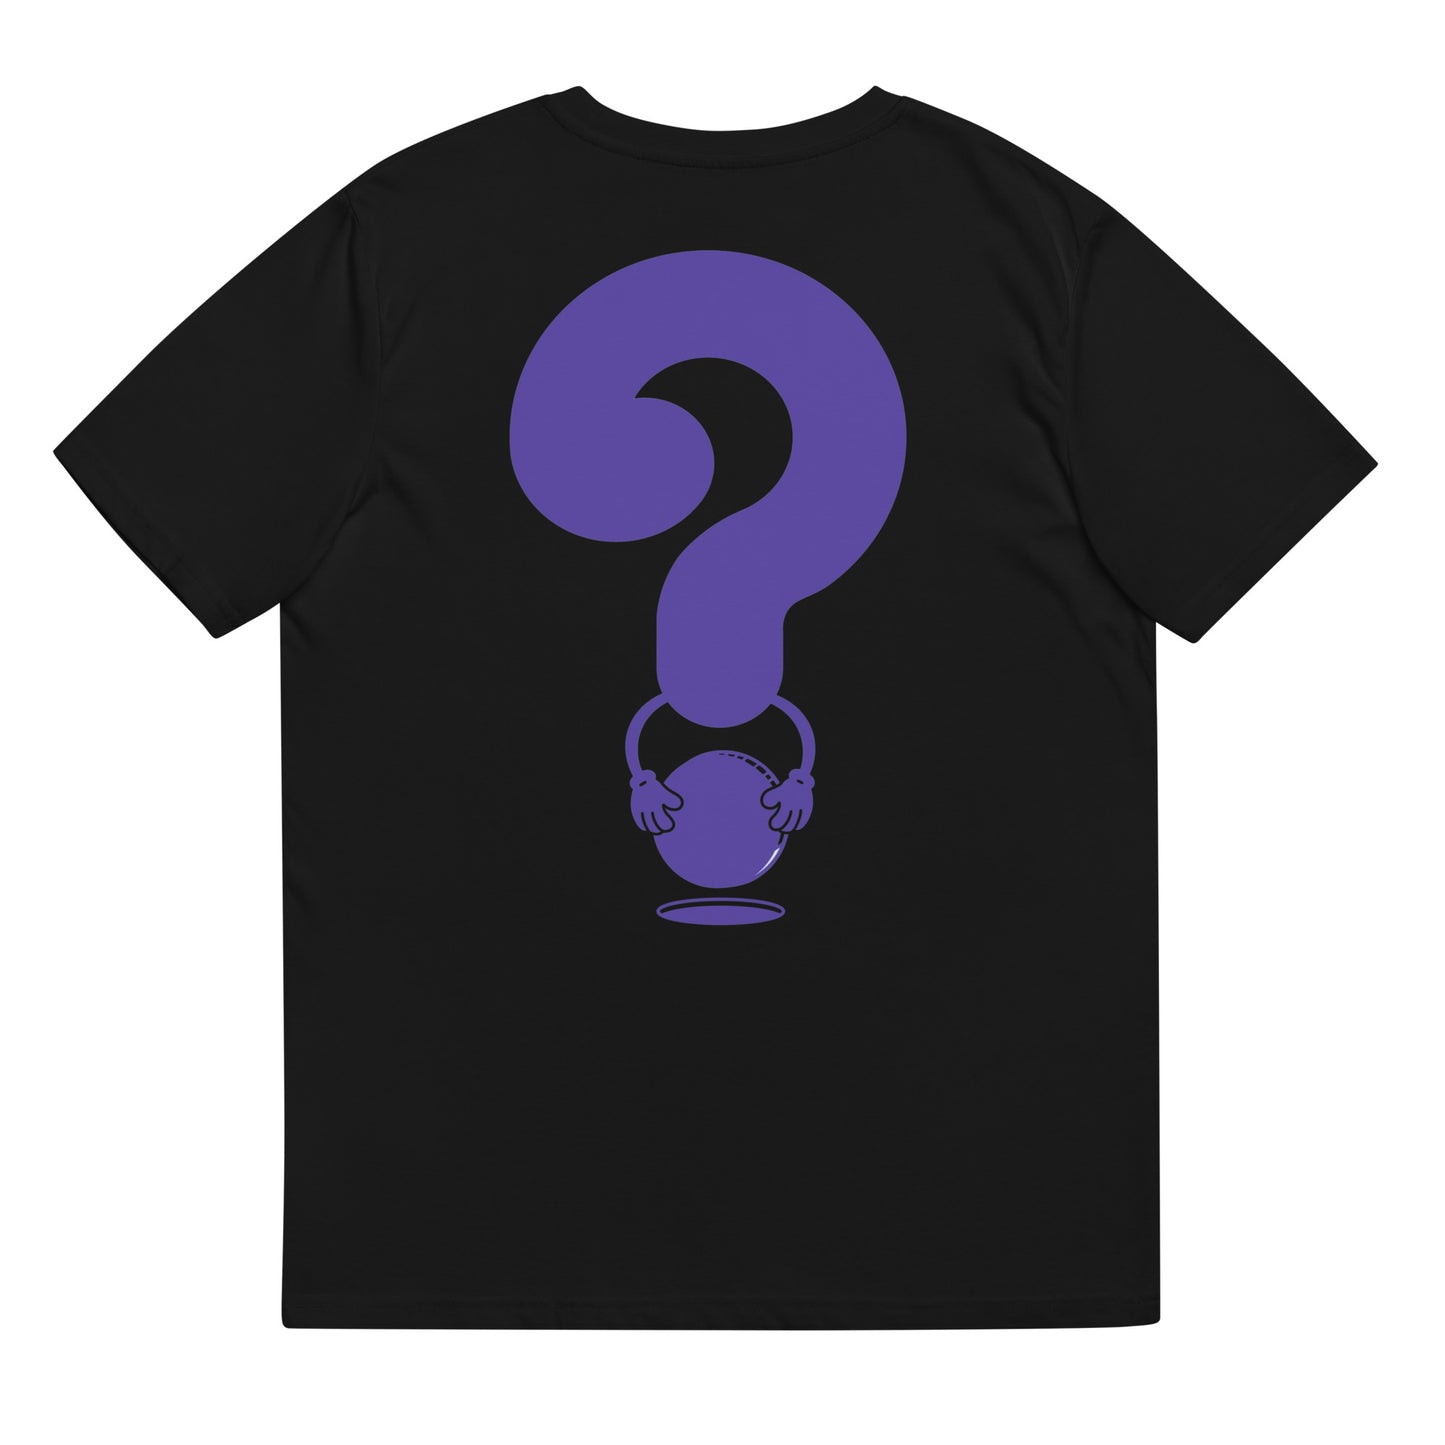 QSTN—Core purple logo t-shirt